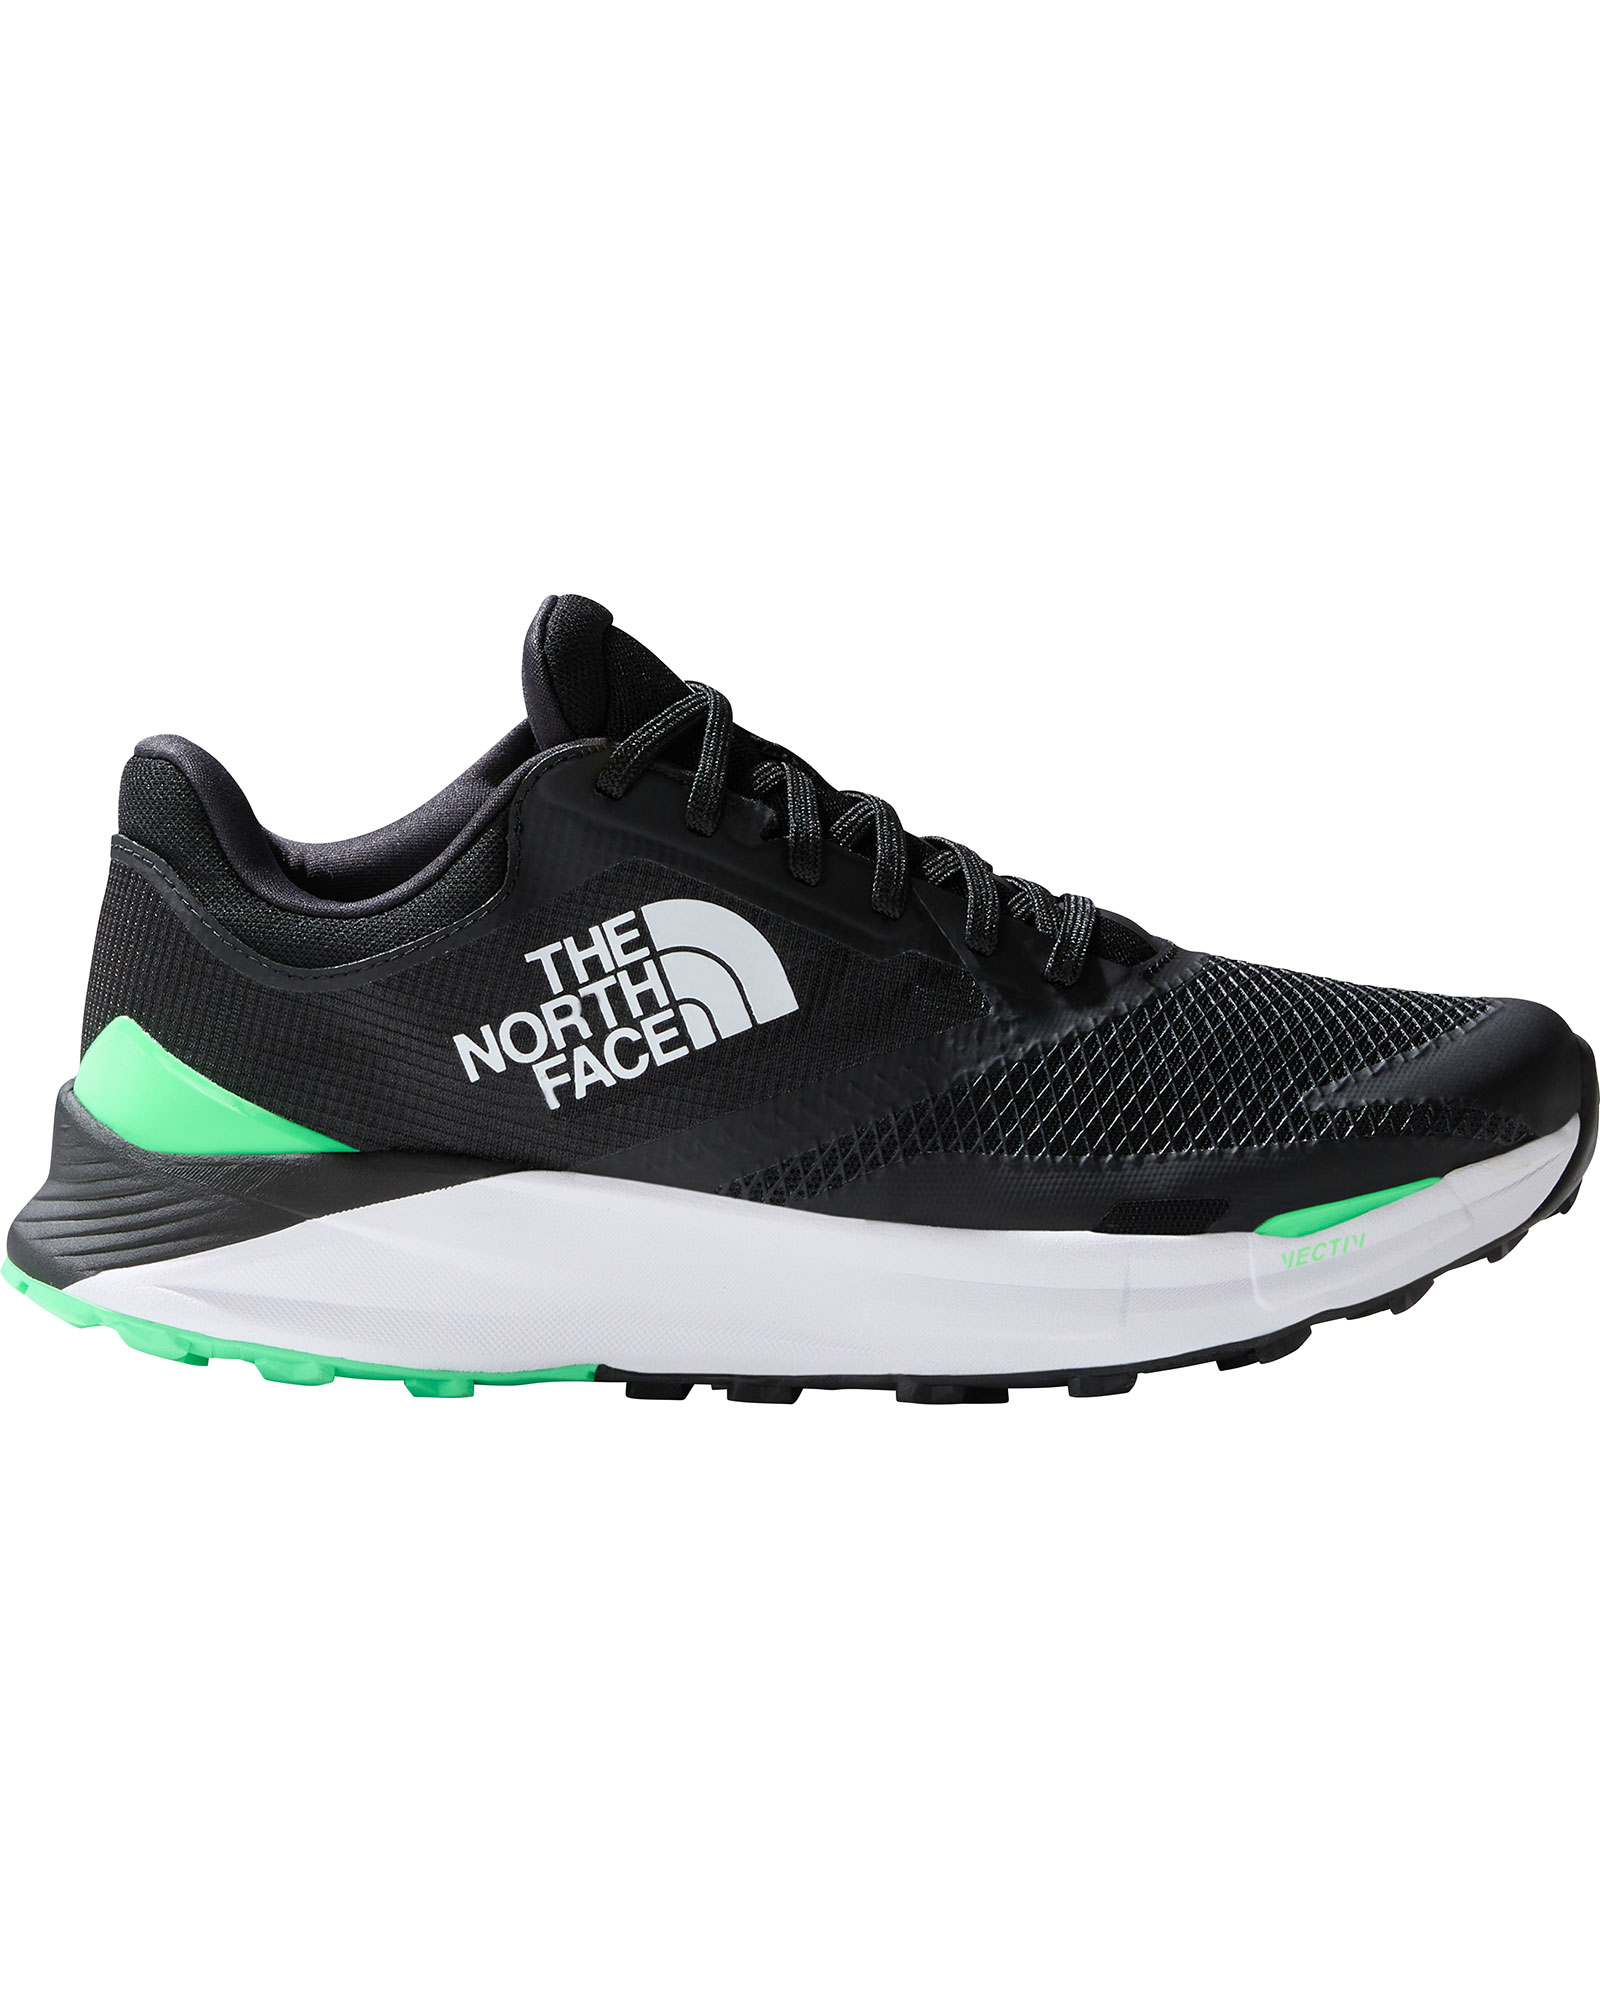 The North Face Vectiv Enduris 3 Men’s Trail Shoes - TNF Black/Chlorophyll Green UK 8